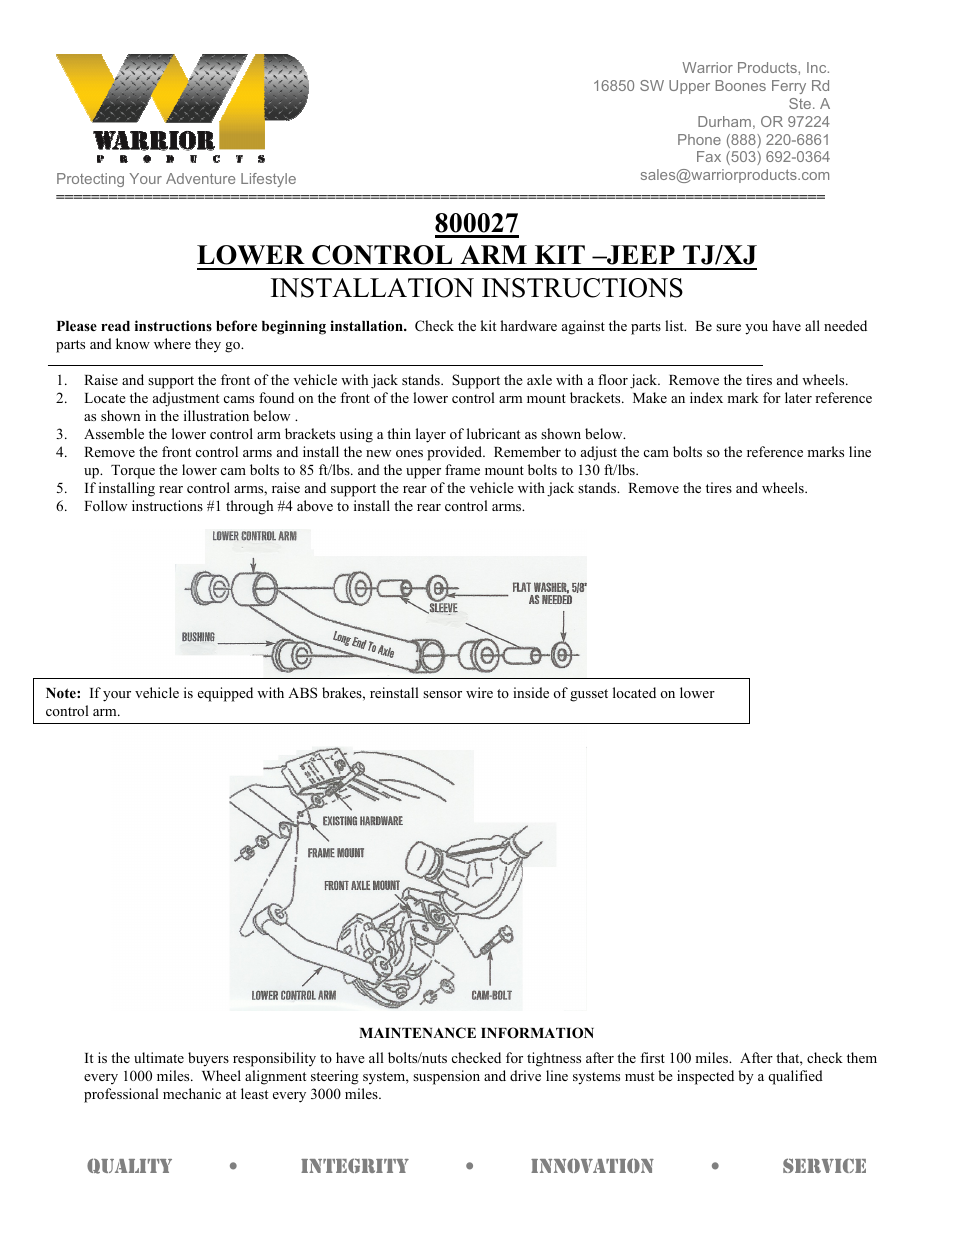 800027 LOWER CONTROL ARM KIT (1997 – 2006 Jeep TJ Wrangler)